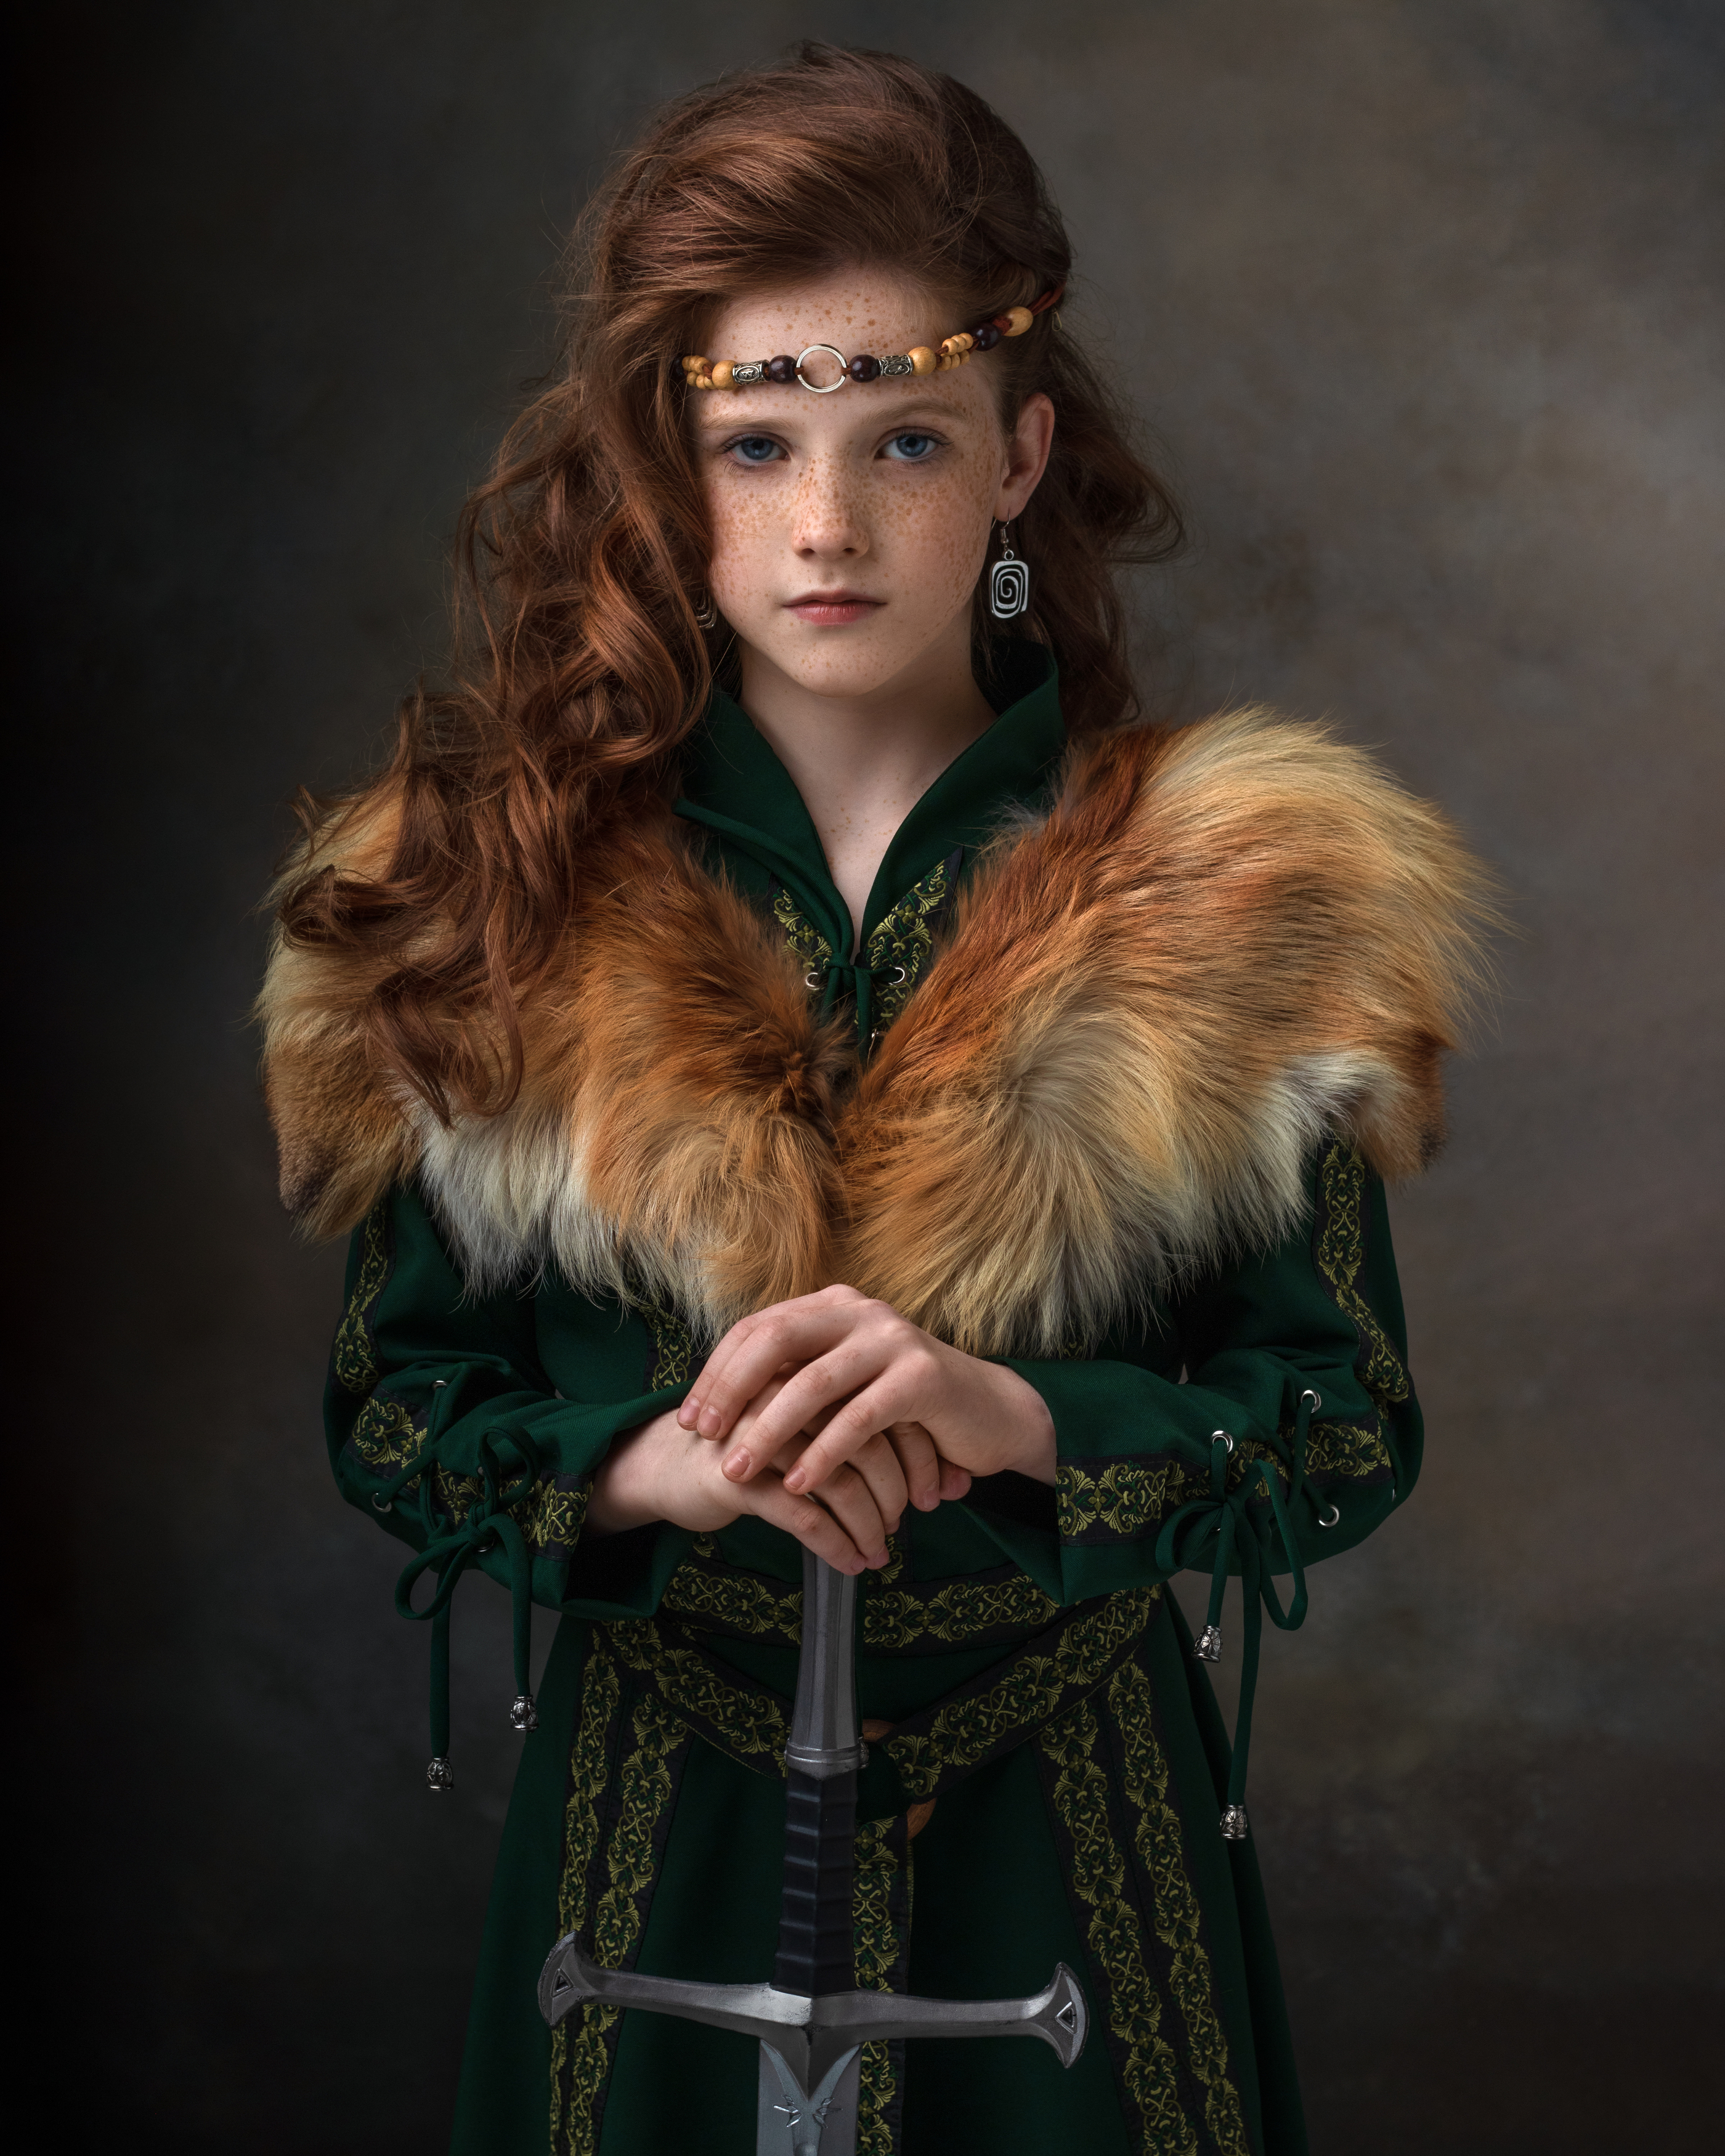 Anastasia Kartushina Women Freckles Sword Fur Cosplay Children 2800x3500